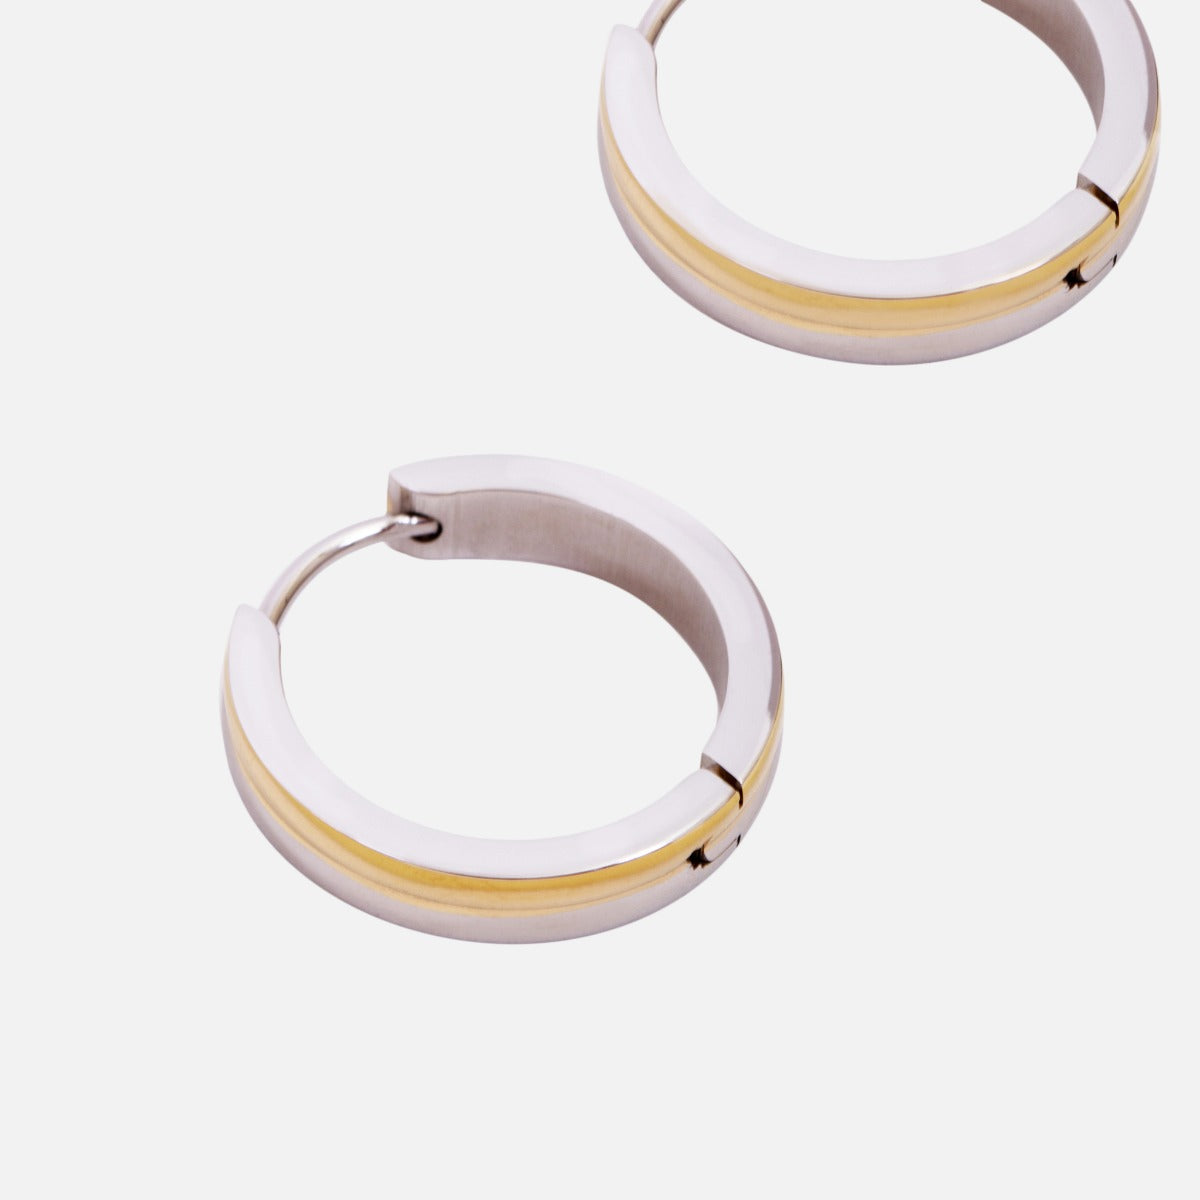 Two-tone stainless steel earrings